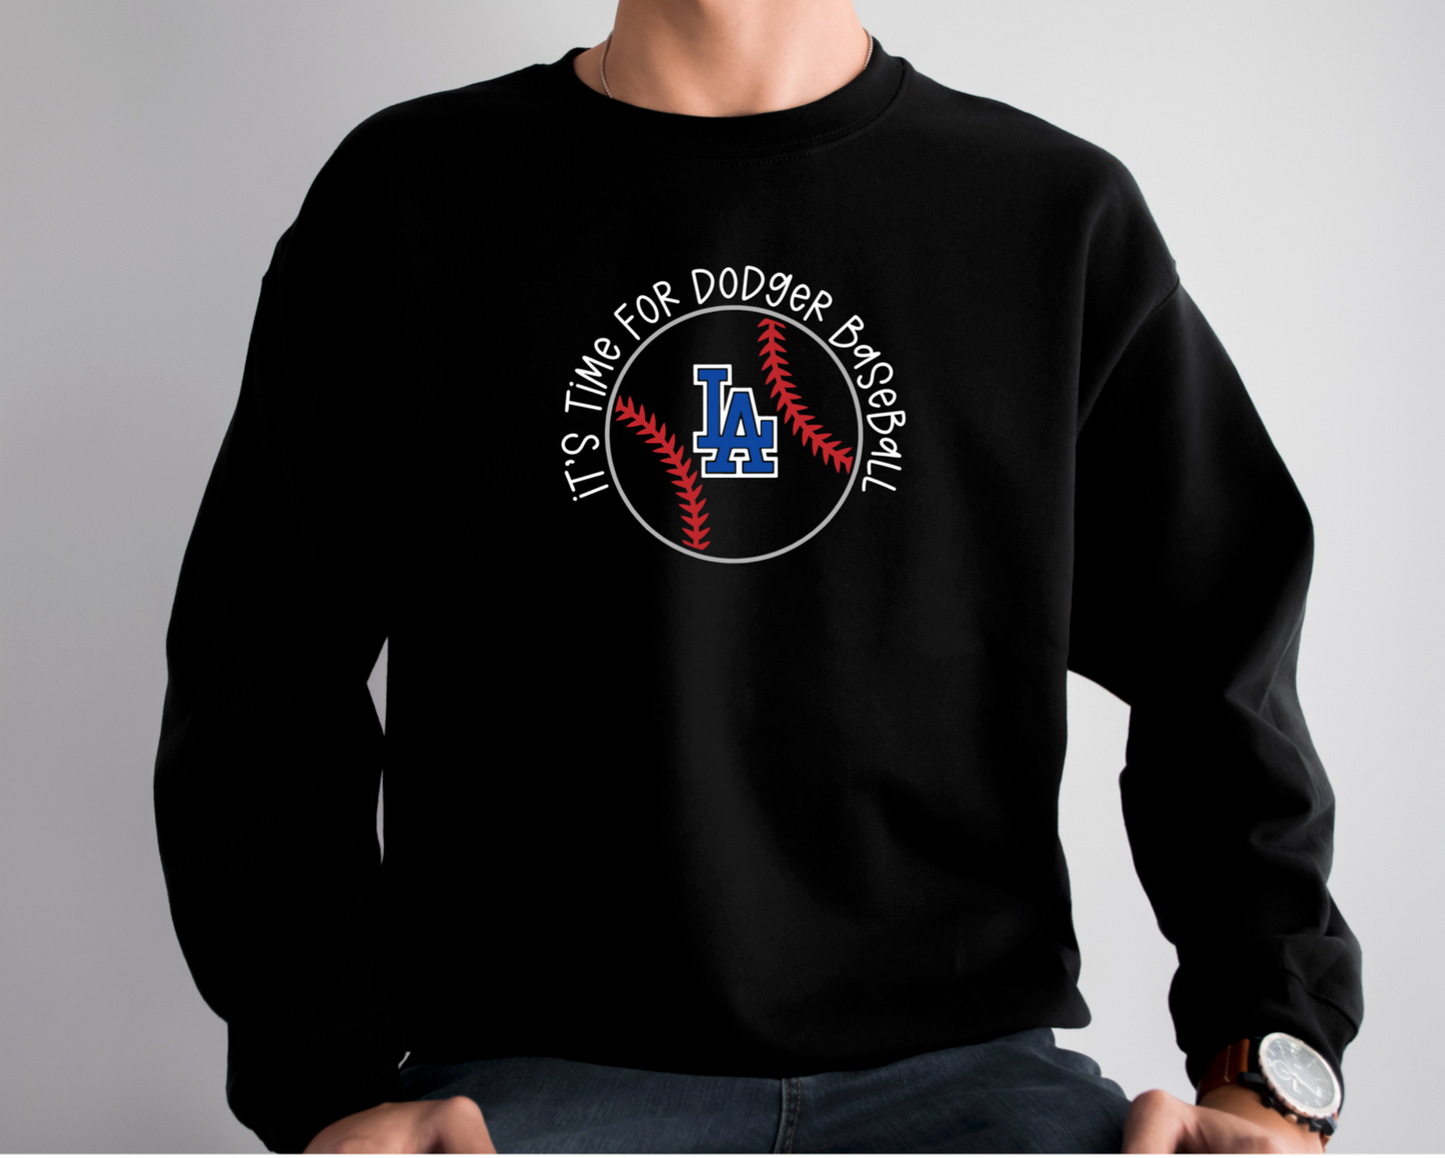 Sportee Chicks Los Angeles Dodgers | It's Time for Dodger Baseball (ITFDB) Tshirt, Sweatshirt, Hoody Black / Large / Crewneck Sweatshirt